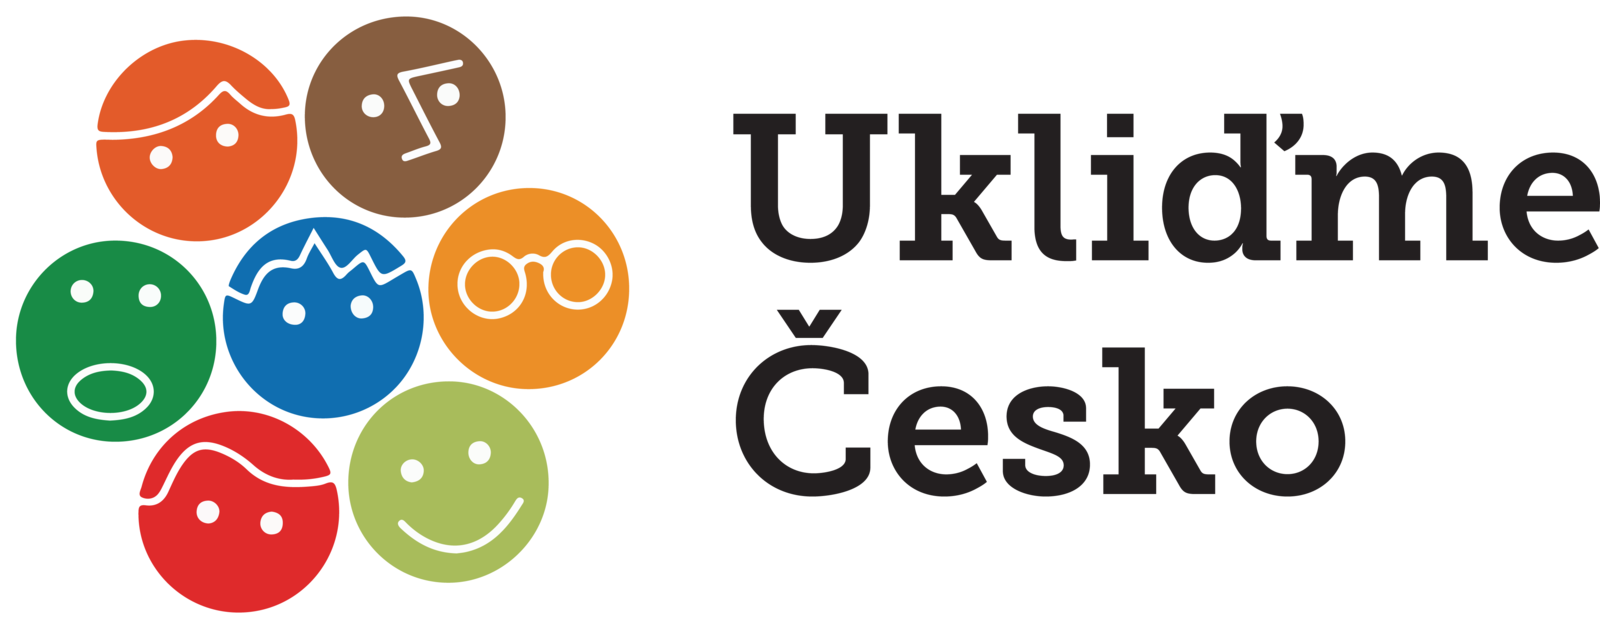 UklidmeCesko-logo-siroke-tisk.png